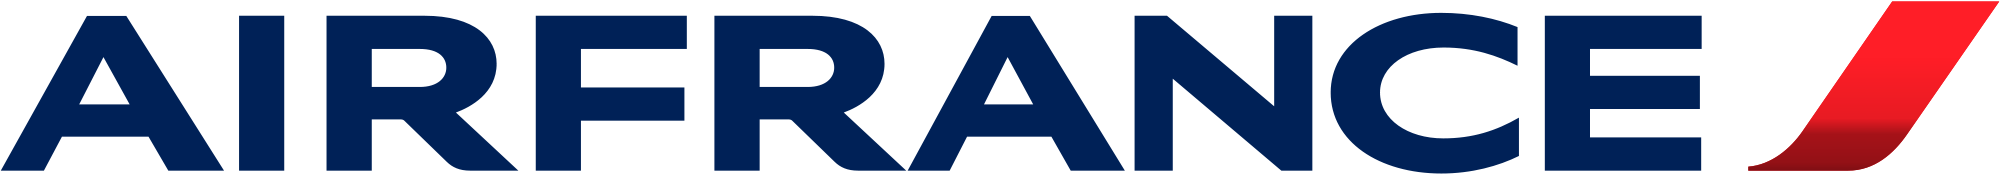 Air France Brand Logo